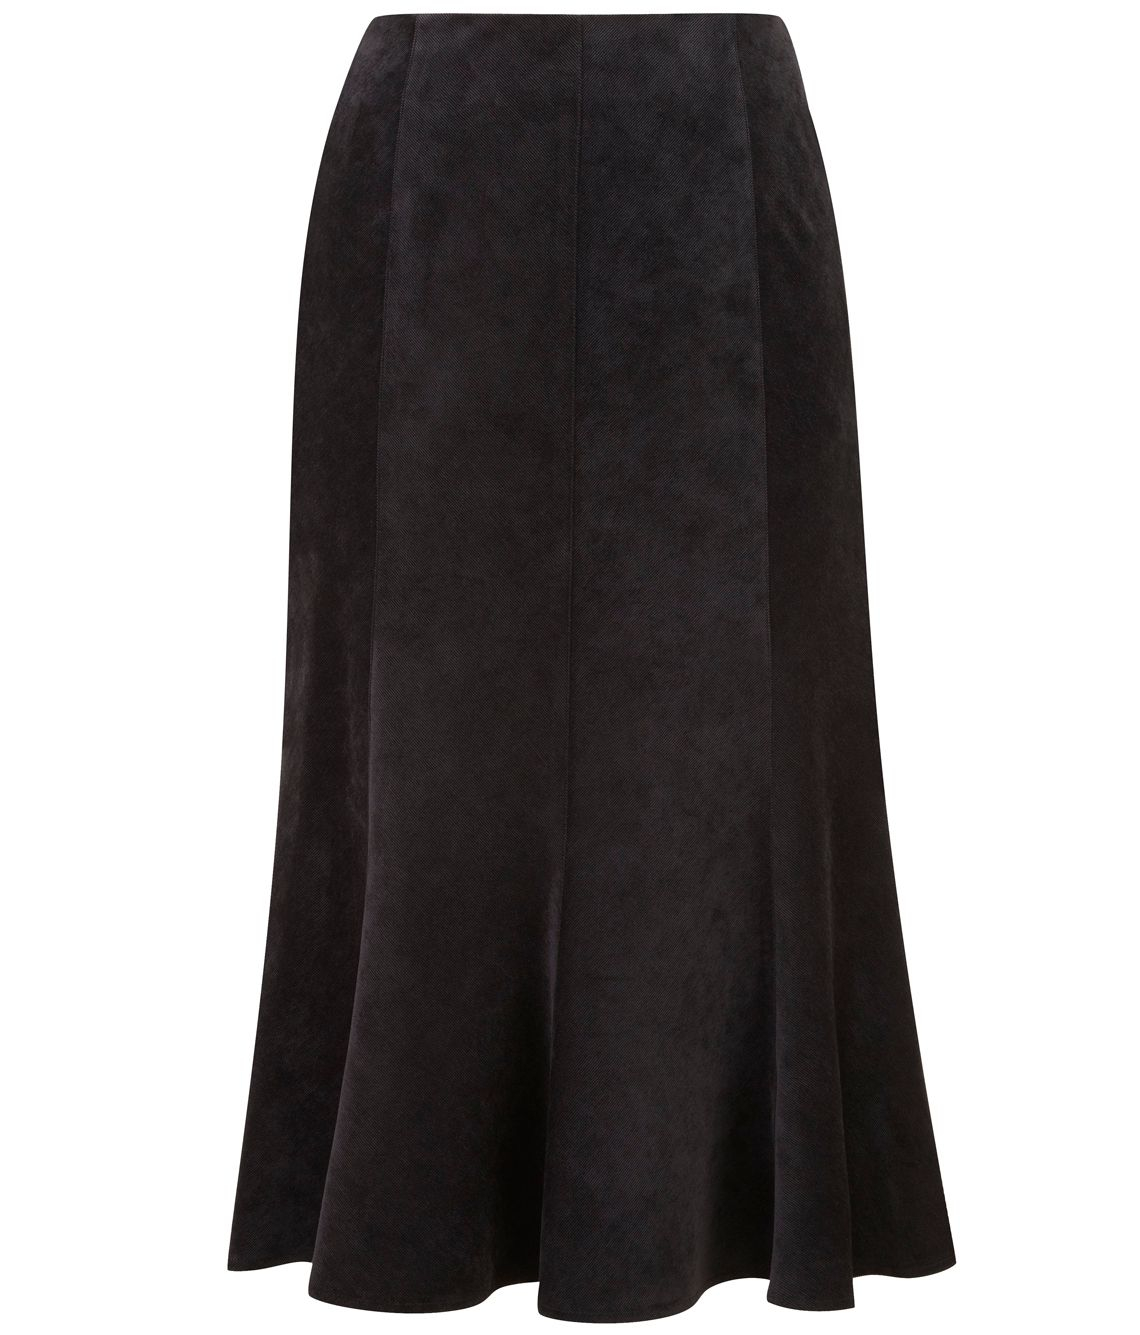 Cc Black Chevron Fit Flare Skirt in Black | Lyst